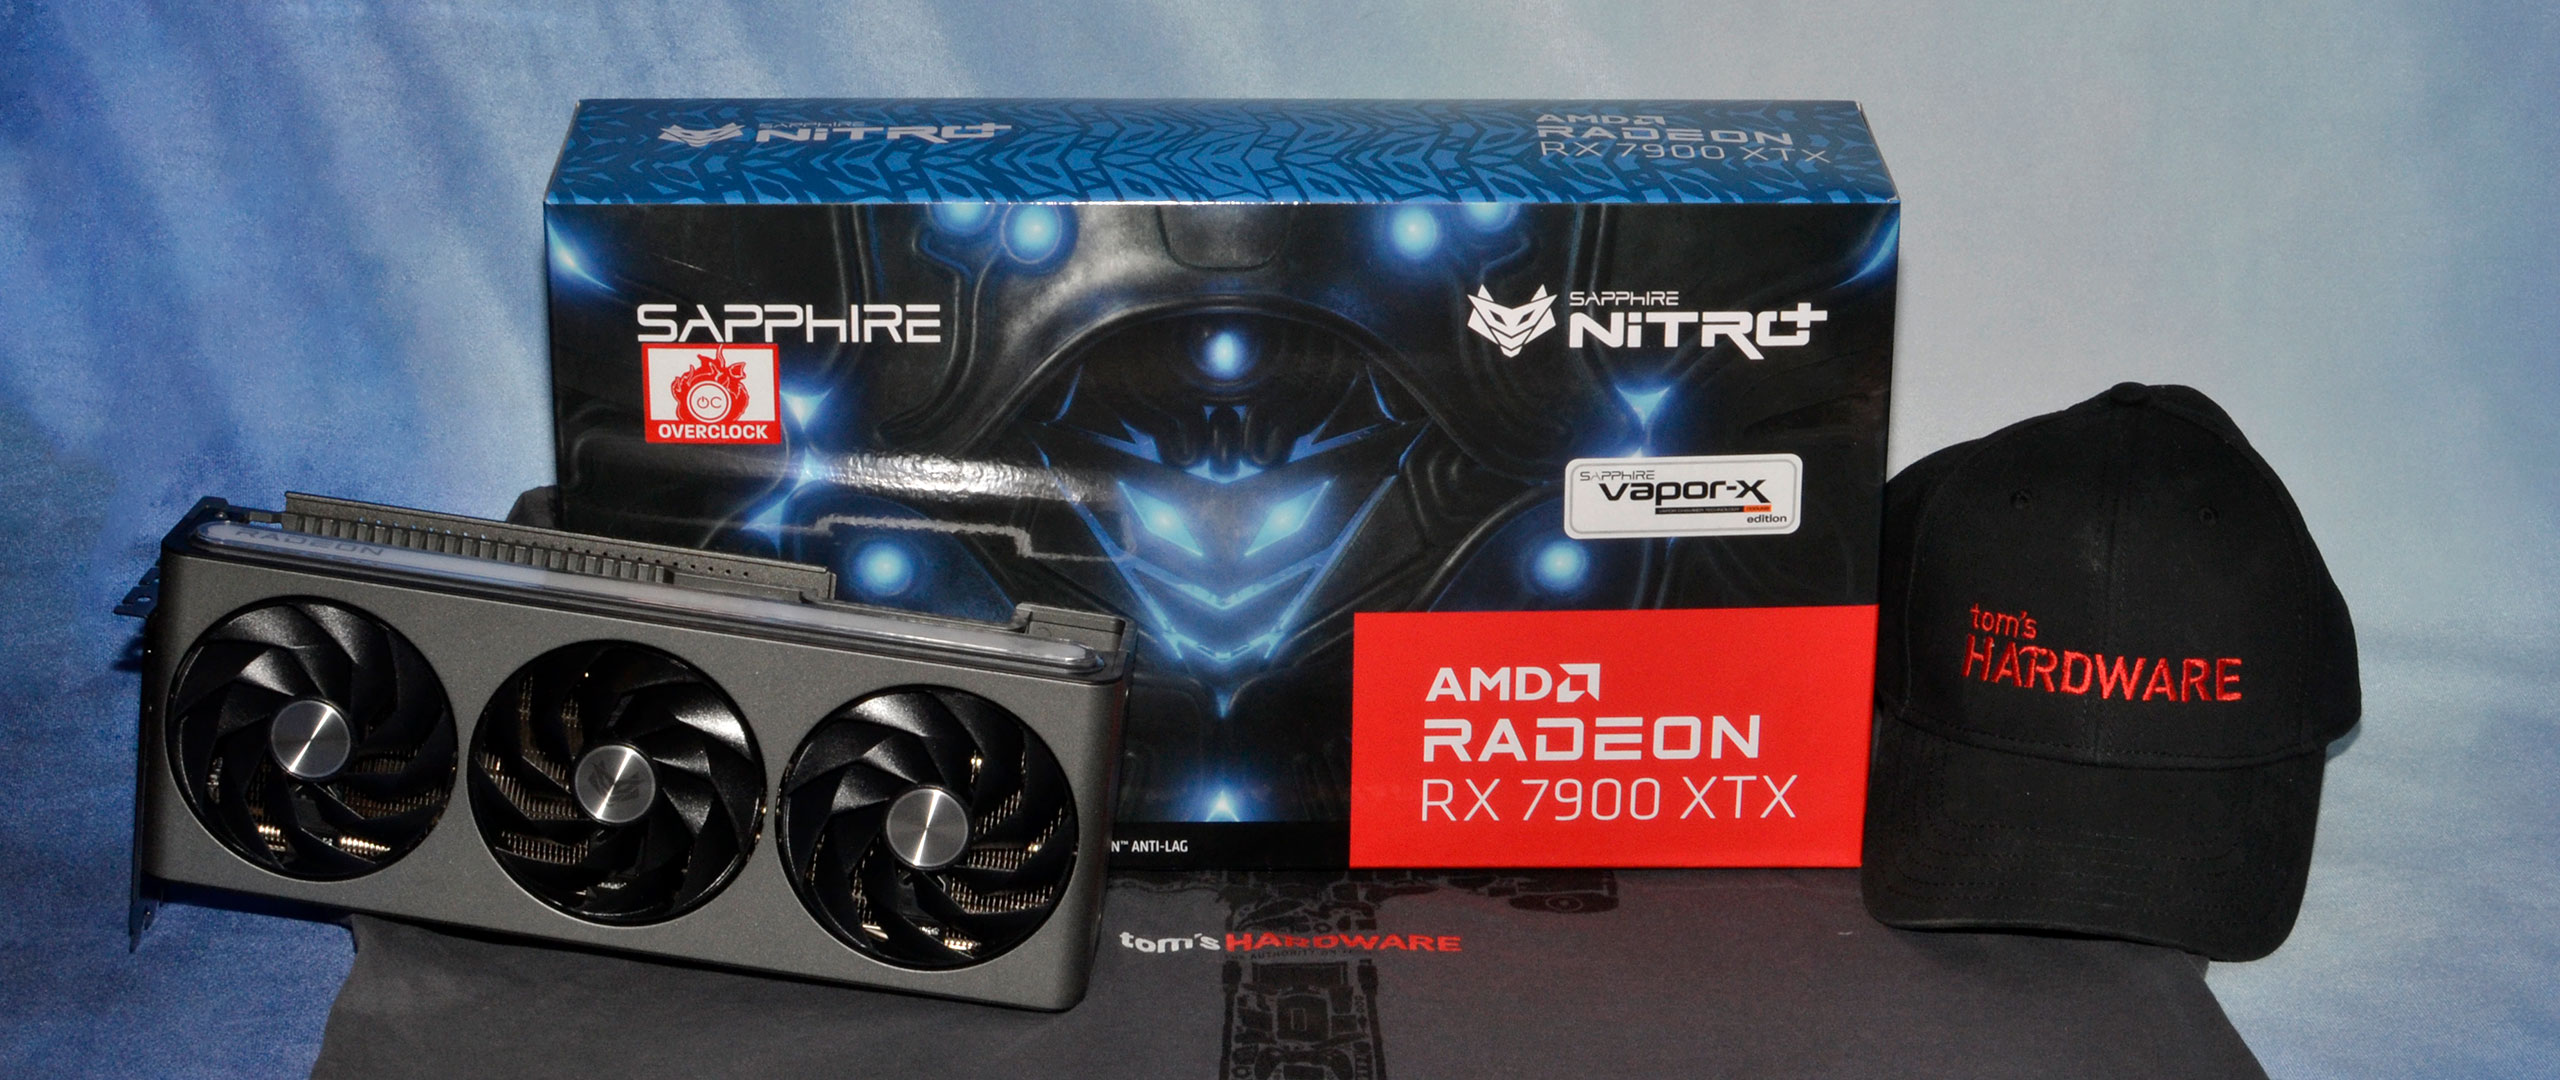 Sapphire Nitro+ AMD Radeon RX 7900 XTX Vapor-X Gaming Graphics